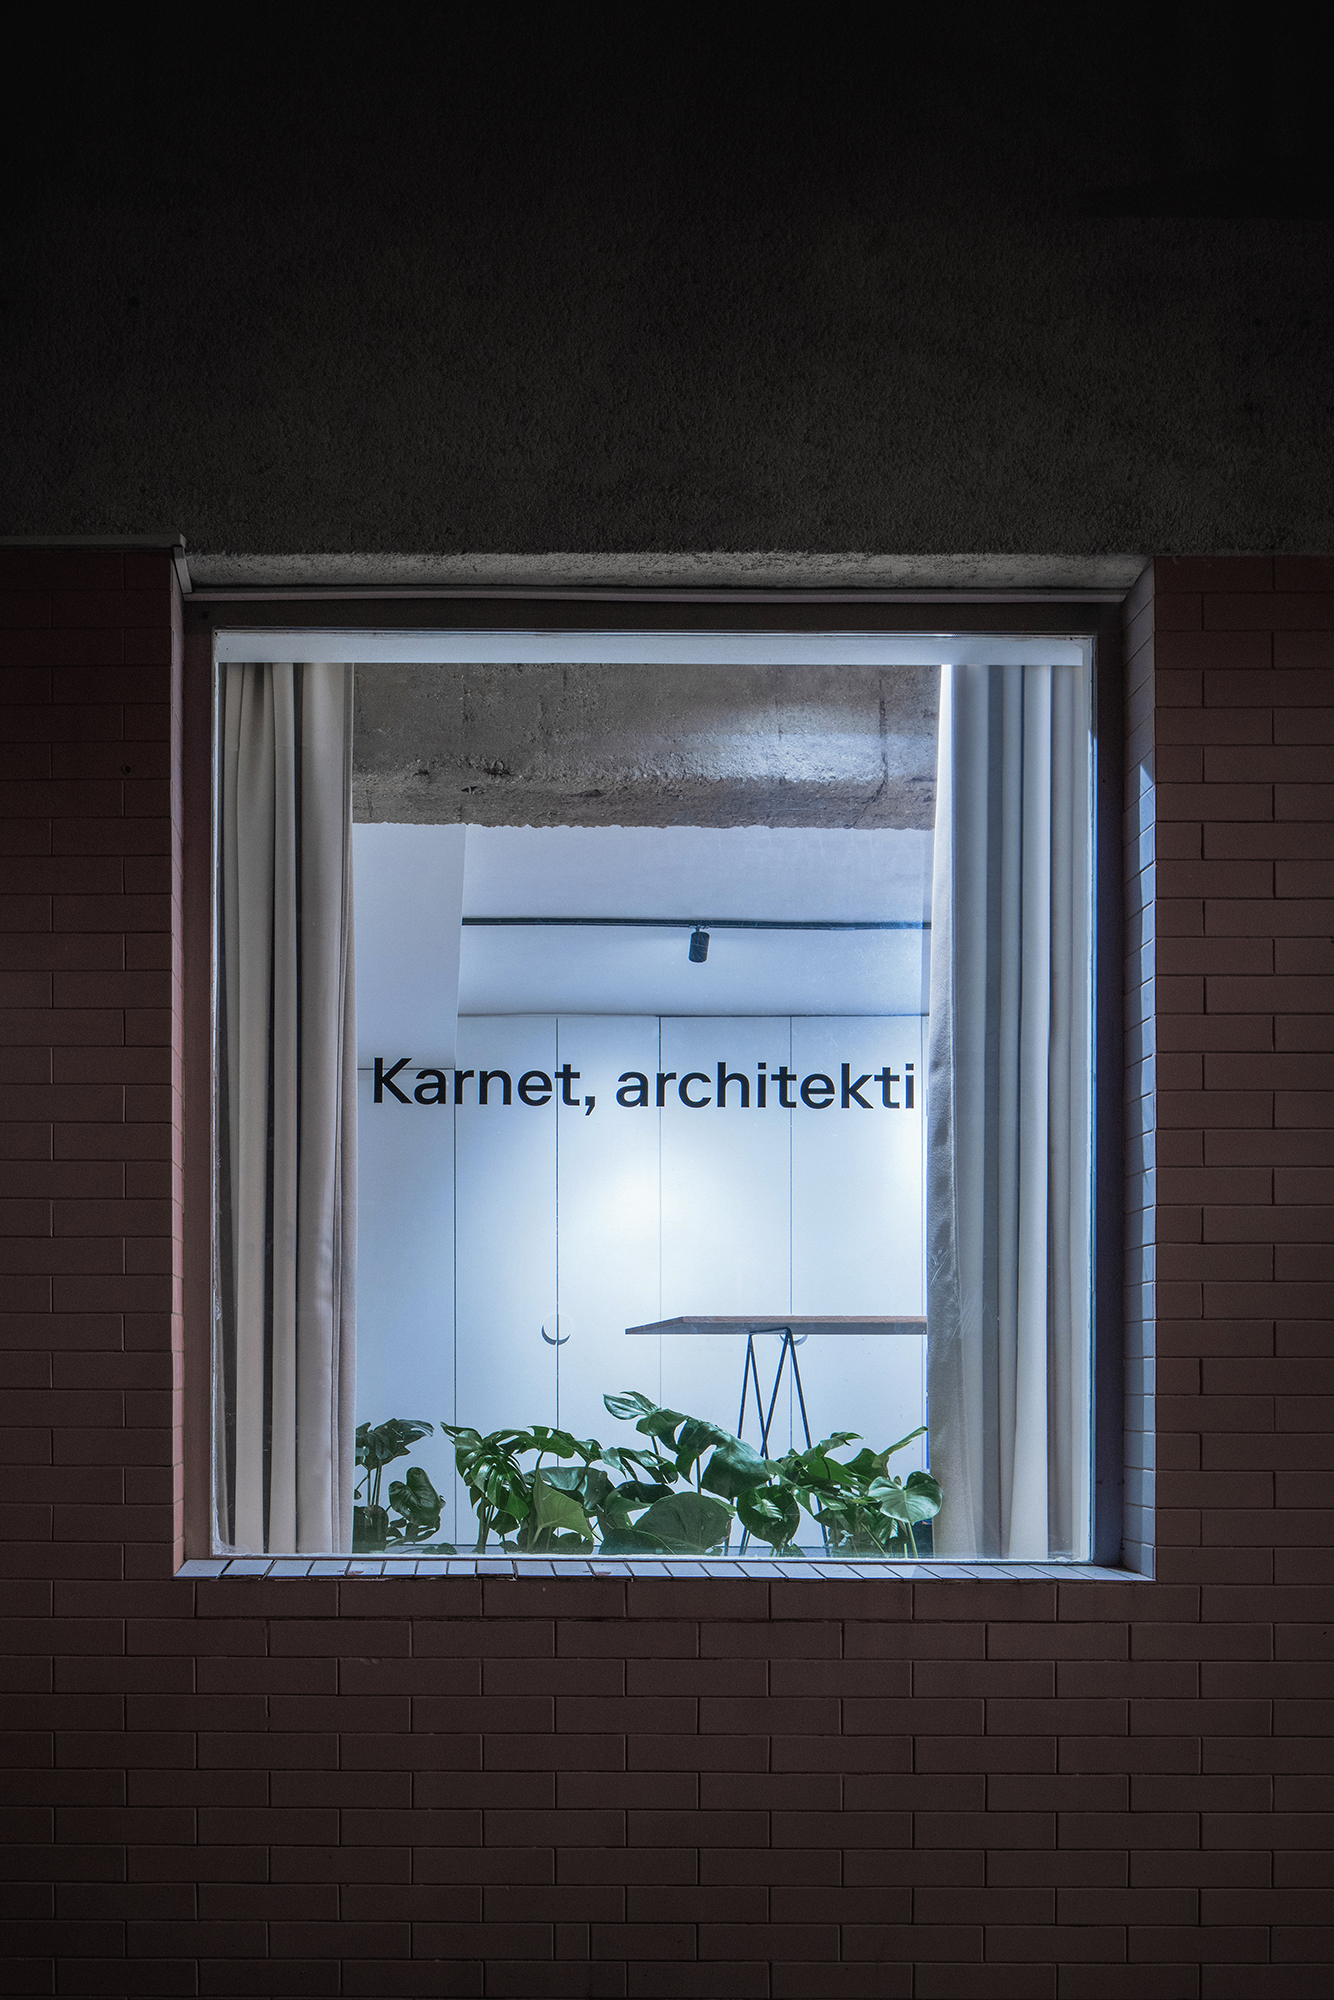 Karnet, architekti ateliér